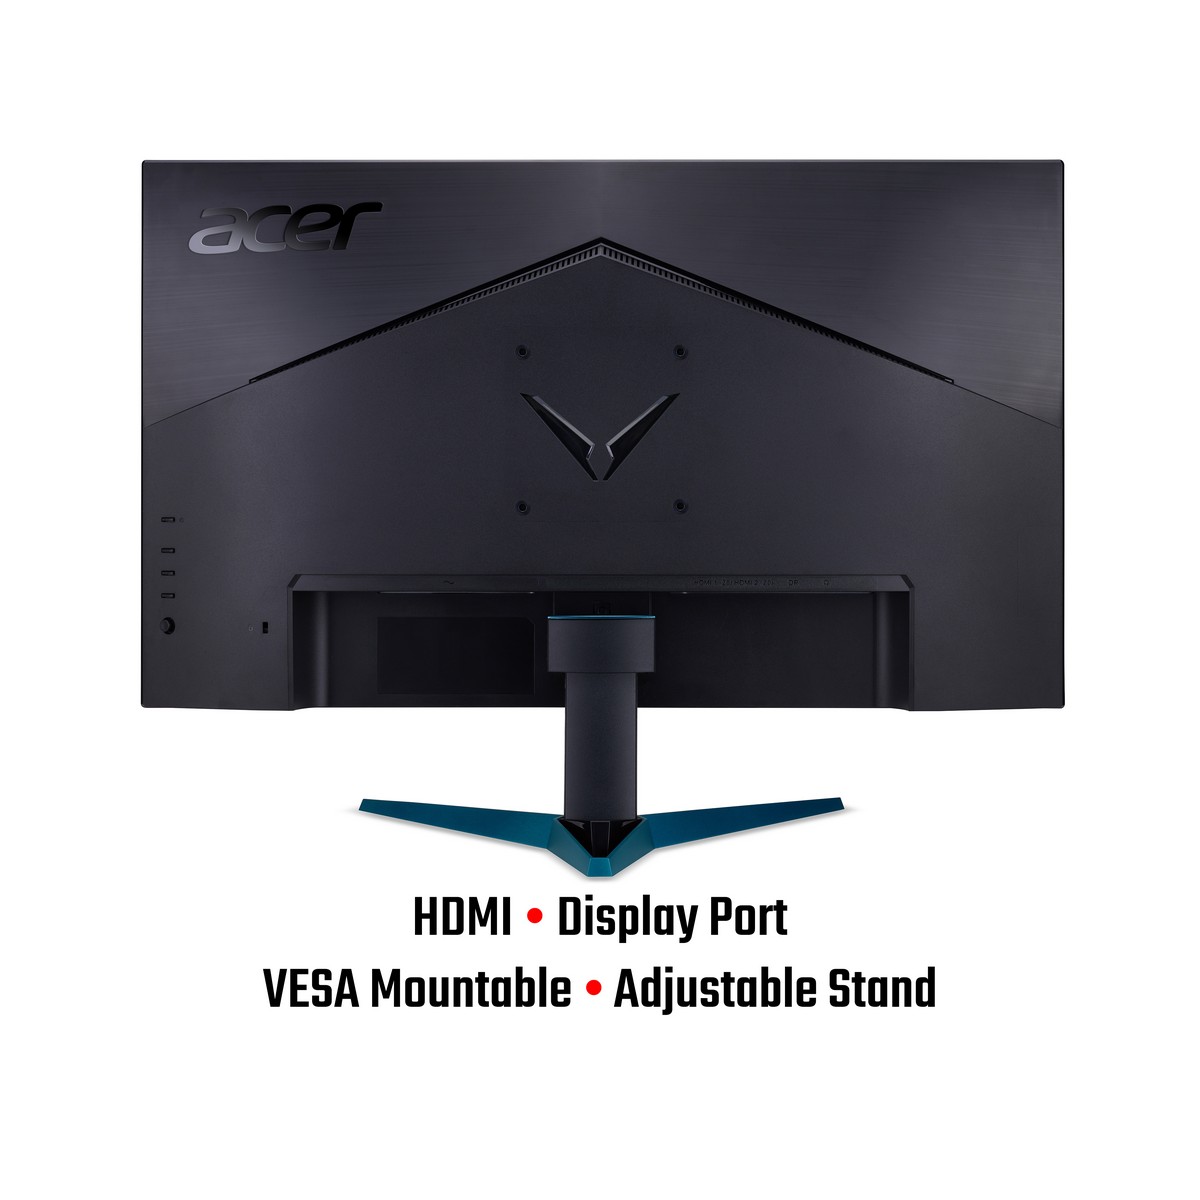 Acer Nitro VG271U 27 inch 1440p 144Hz 1ms WQHD HDR400 IPS Gaming Monitor  PS5 PC